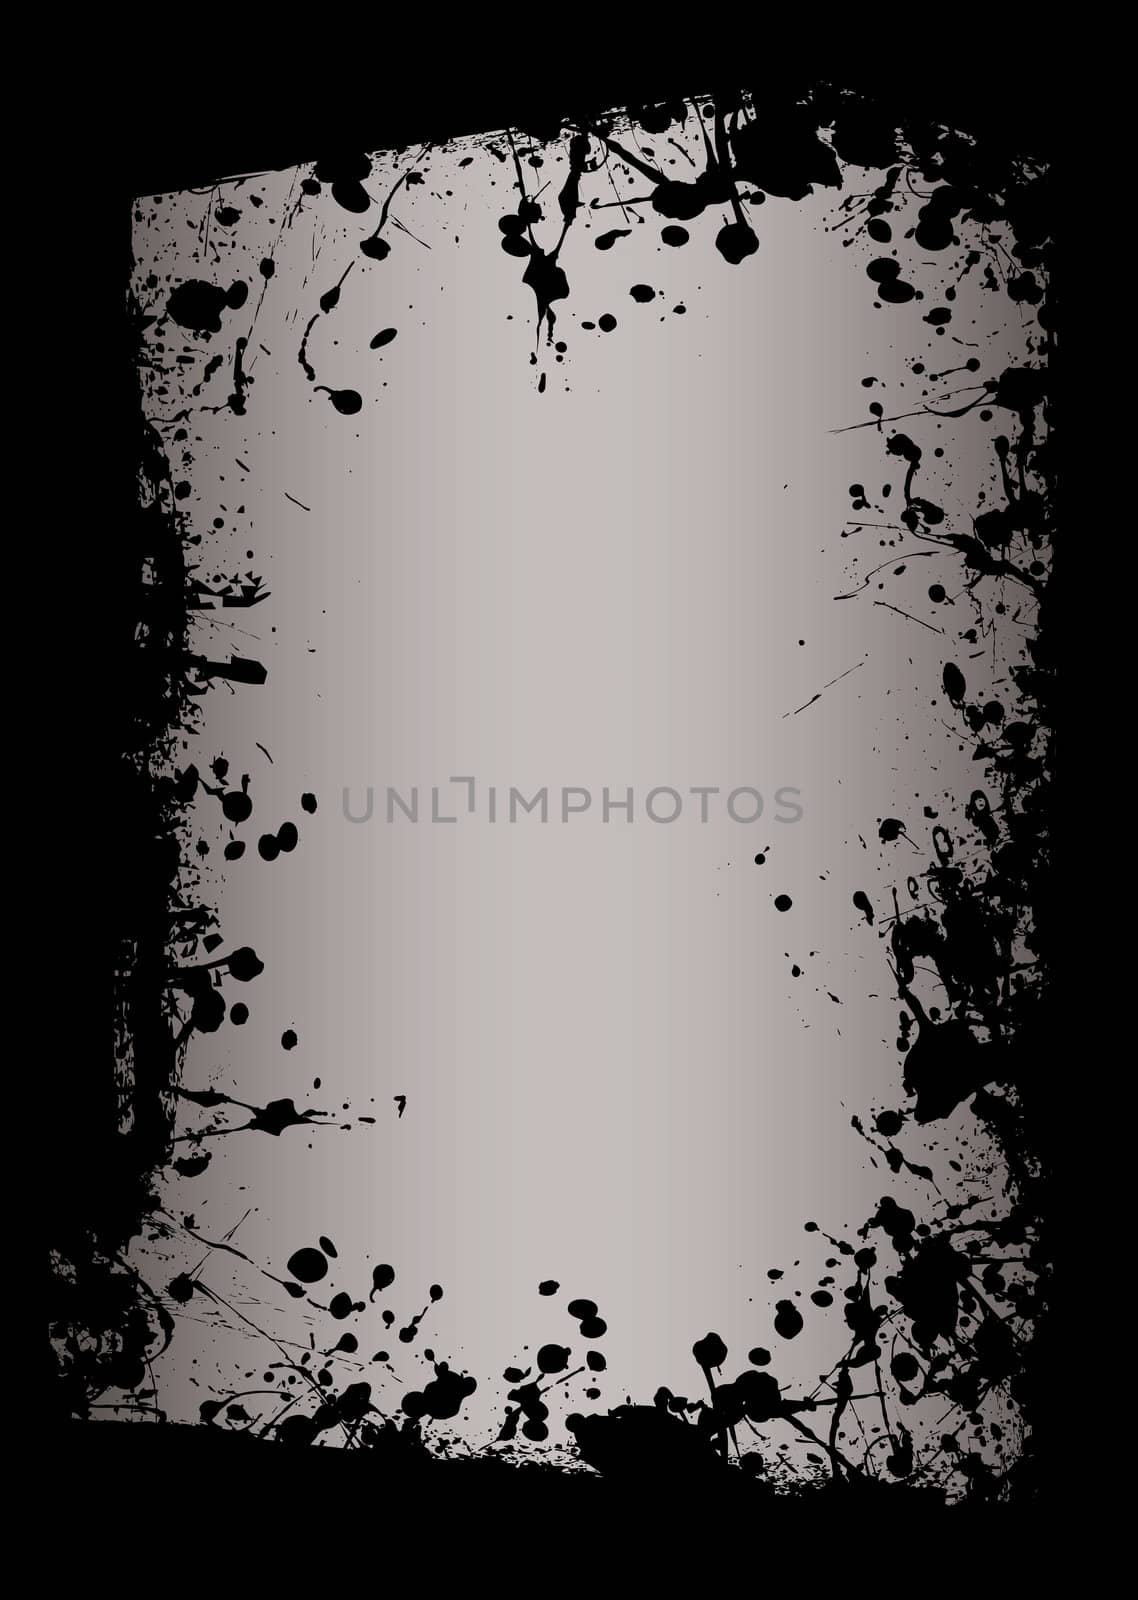 grunge ink splat border with grey highlighted background